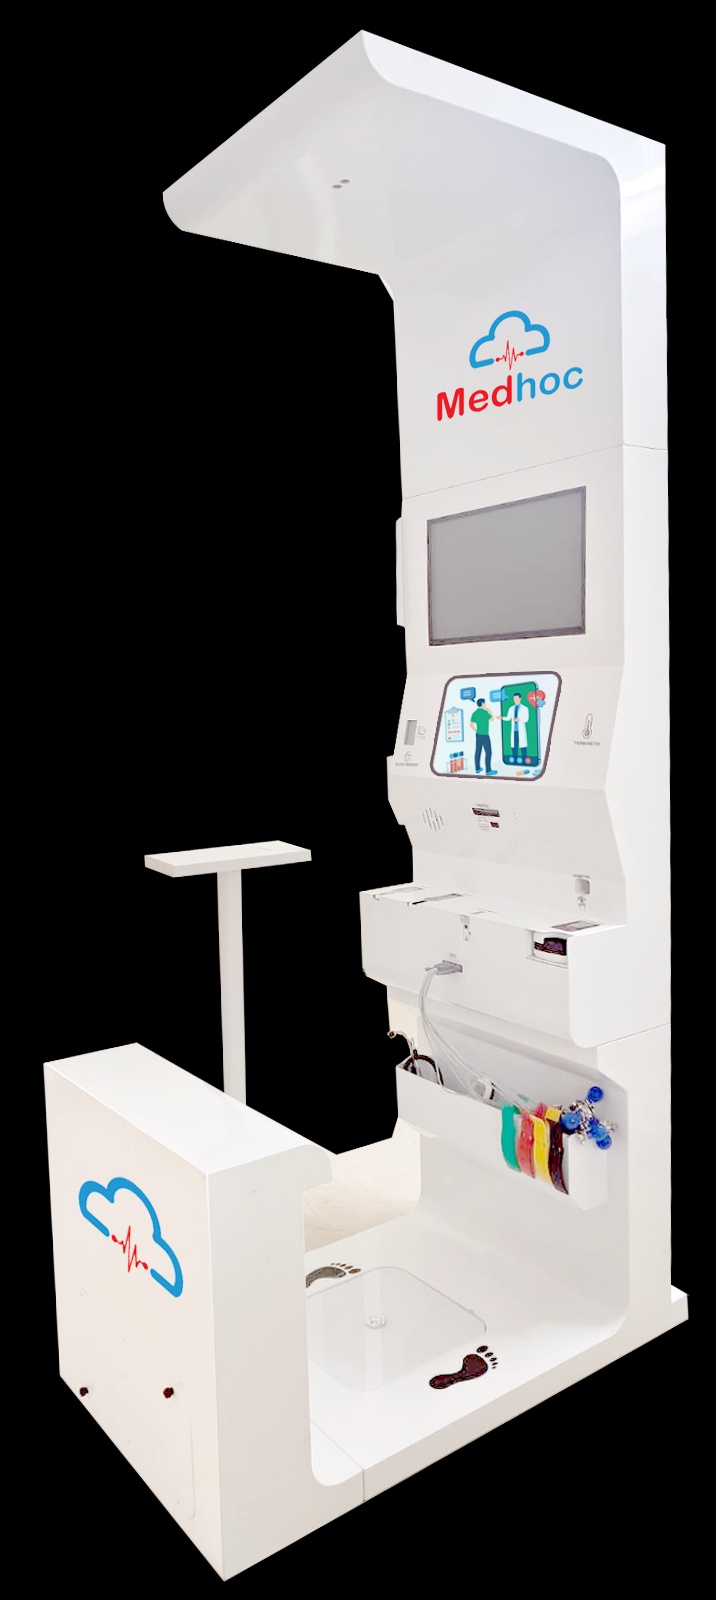 Why use FDA-designed health kiosks?